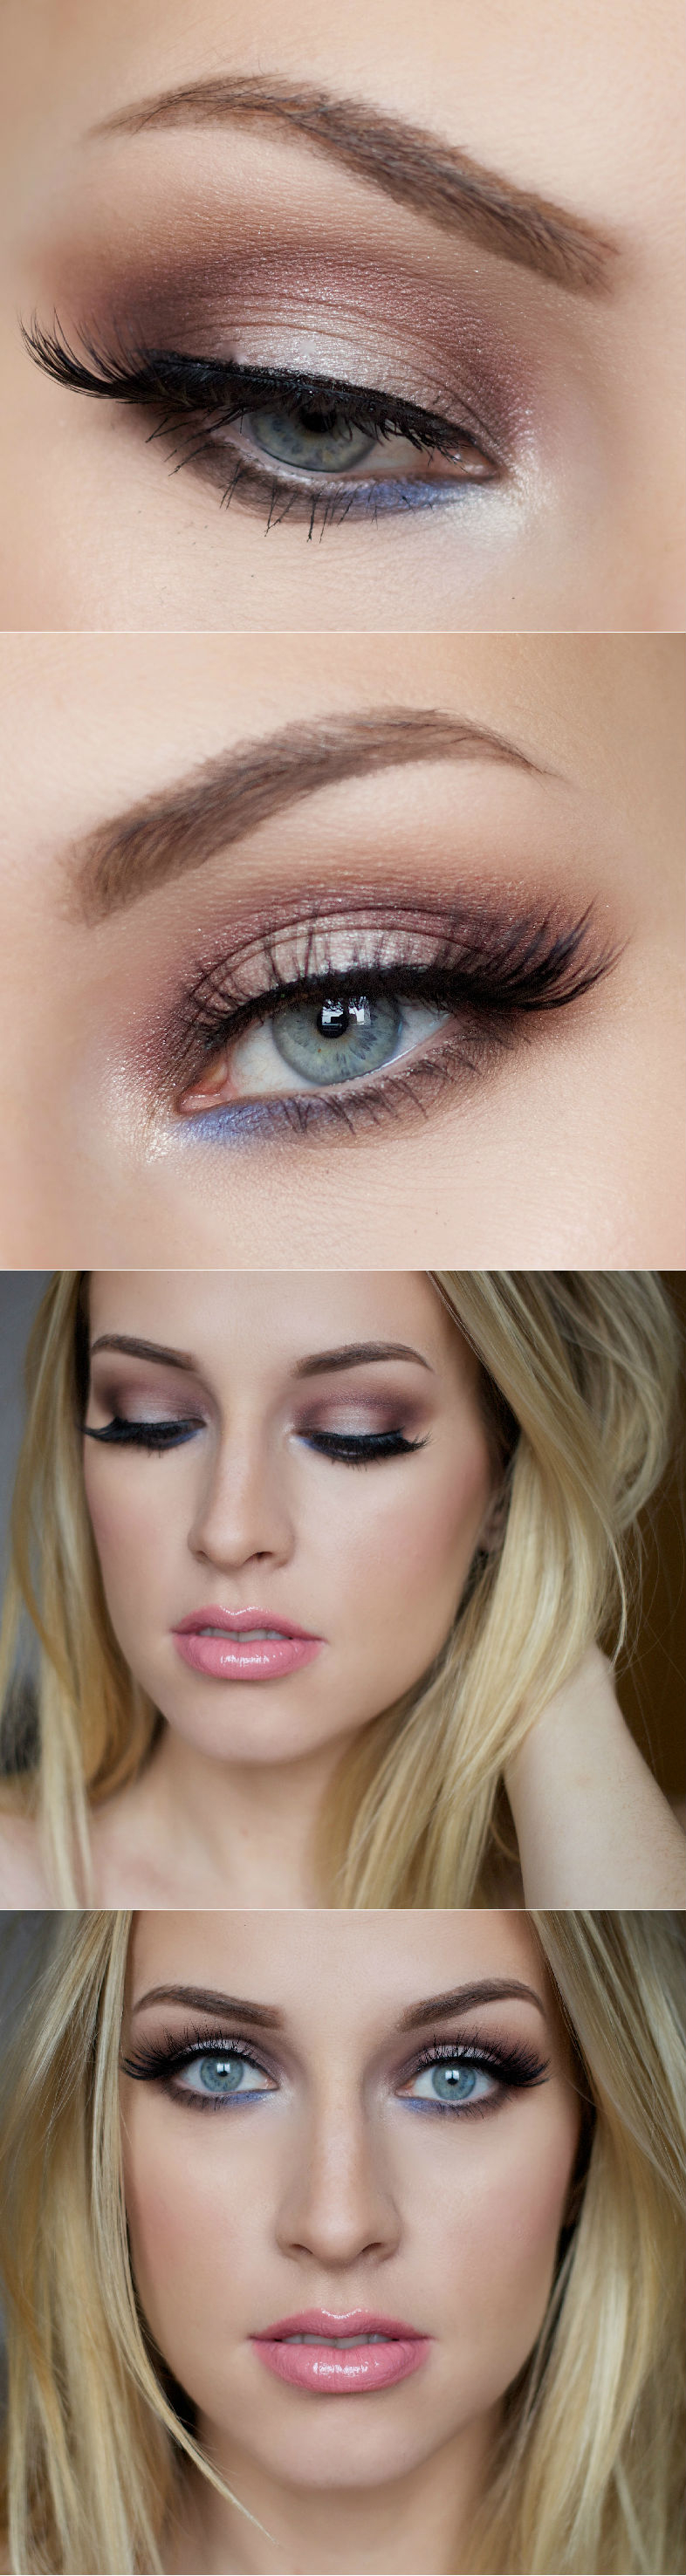 Natural Makeup For Hazel Eyes 5 Ways To Make Blue Eyes Pop With Proper Eye Makeup Her Style Code